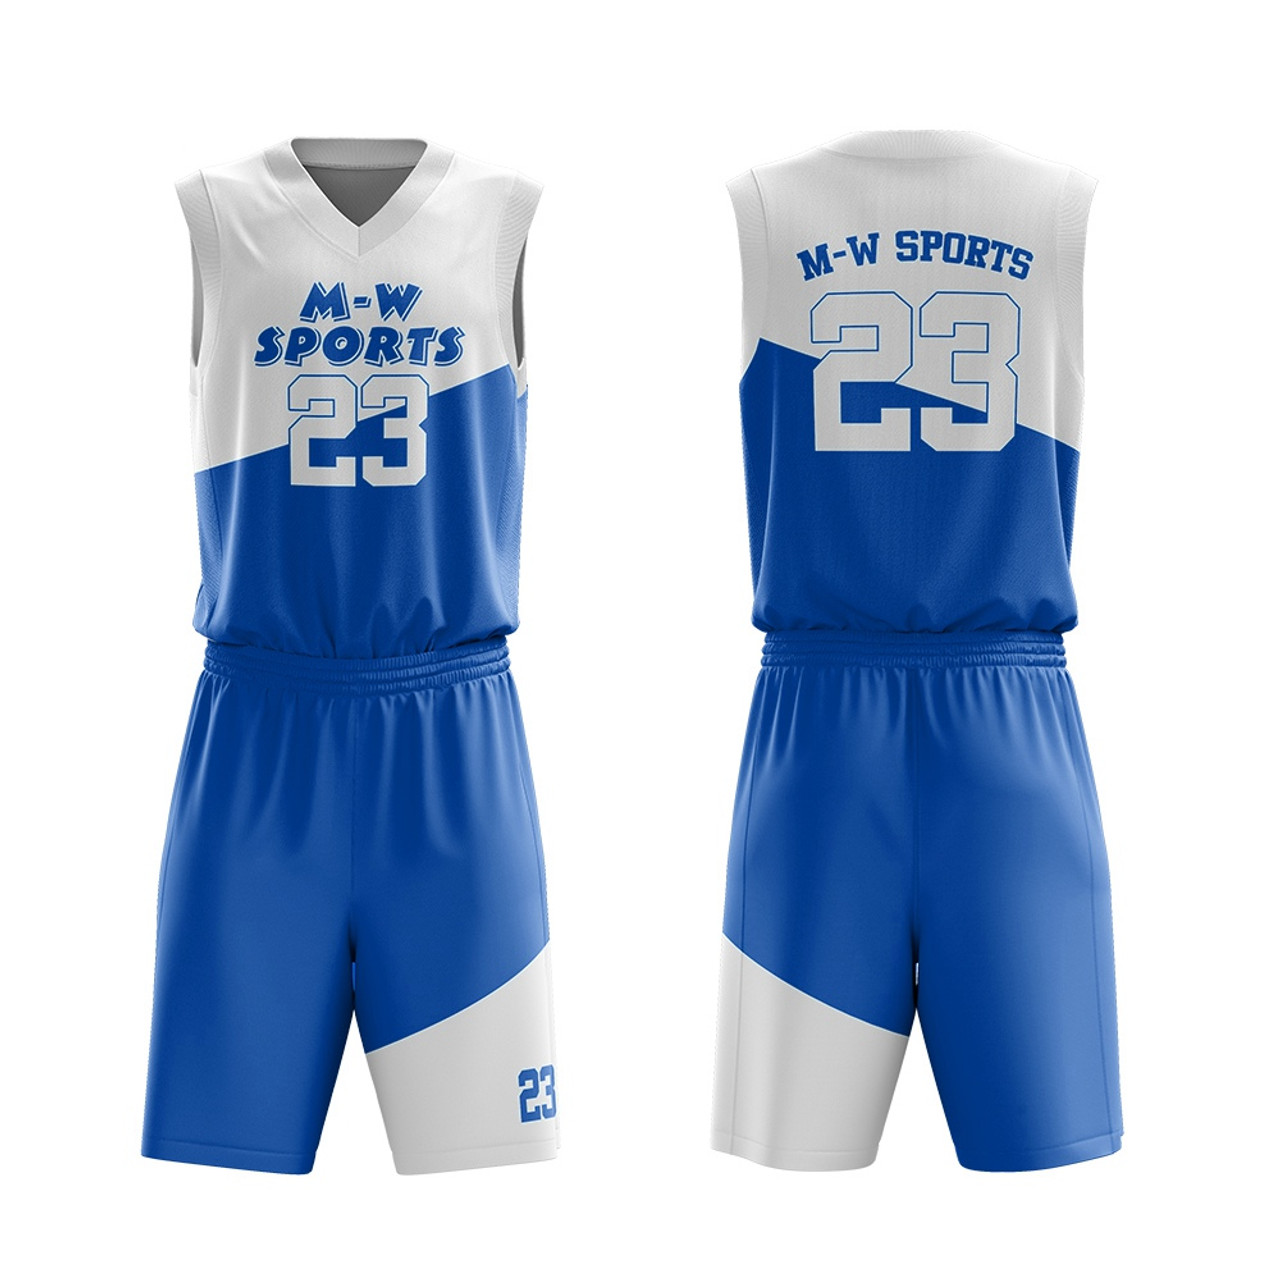 Blue Geometric Sublimation Basketball Jerseys and Shorts